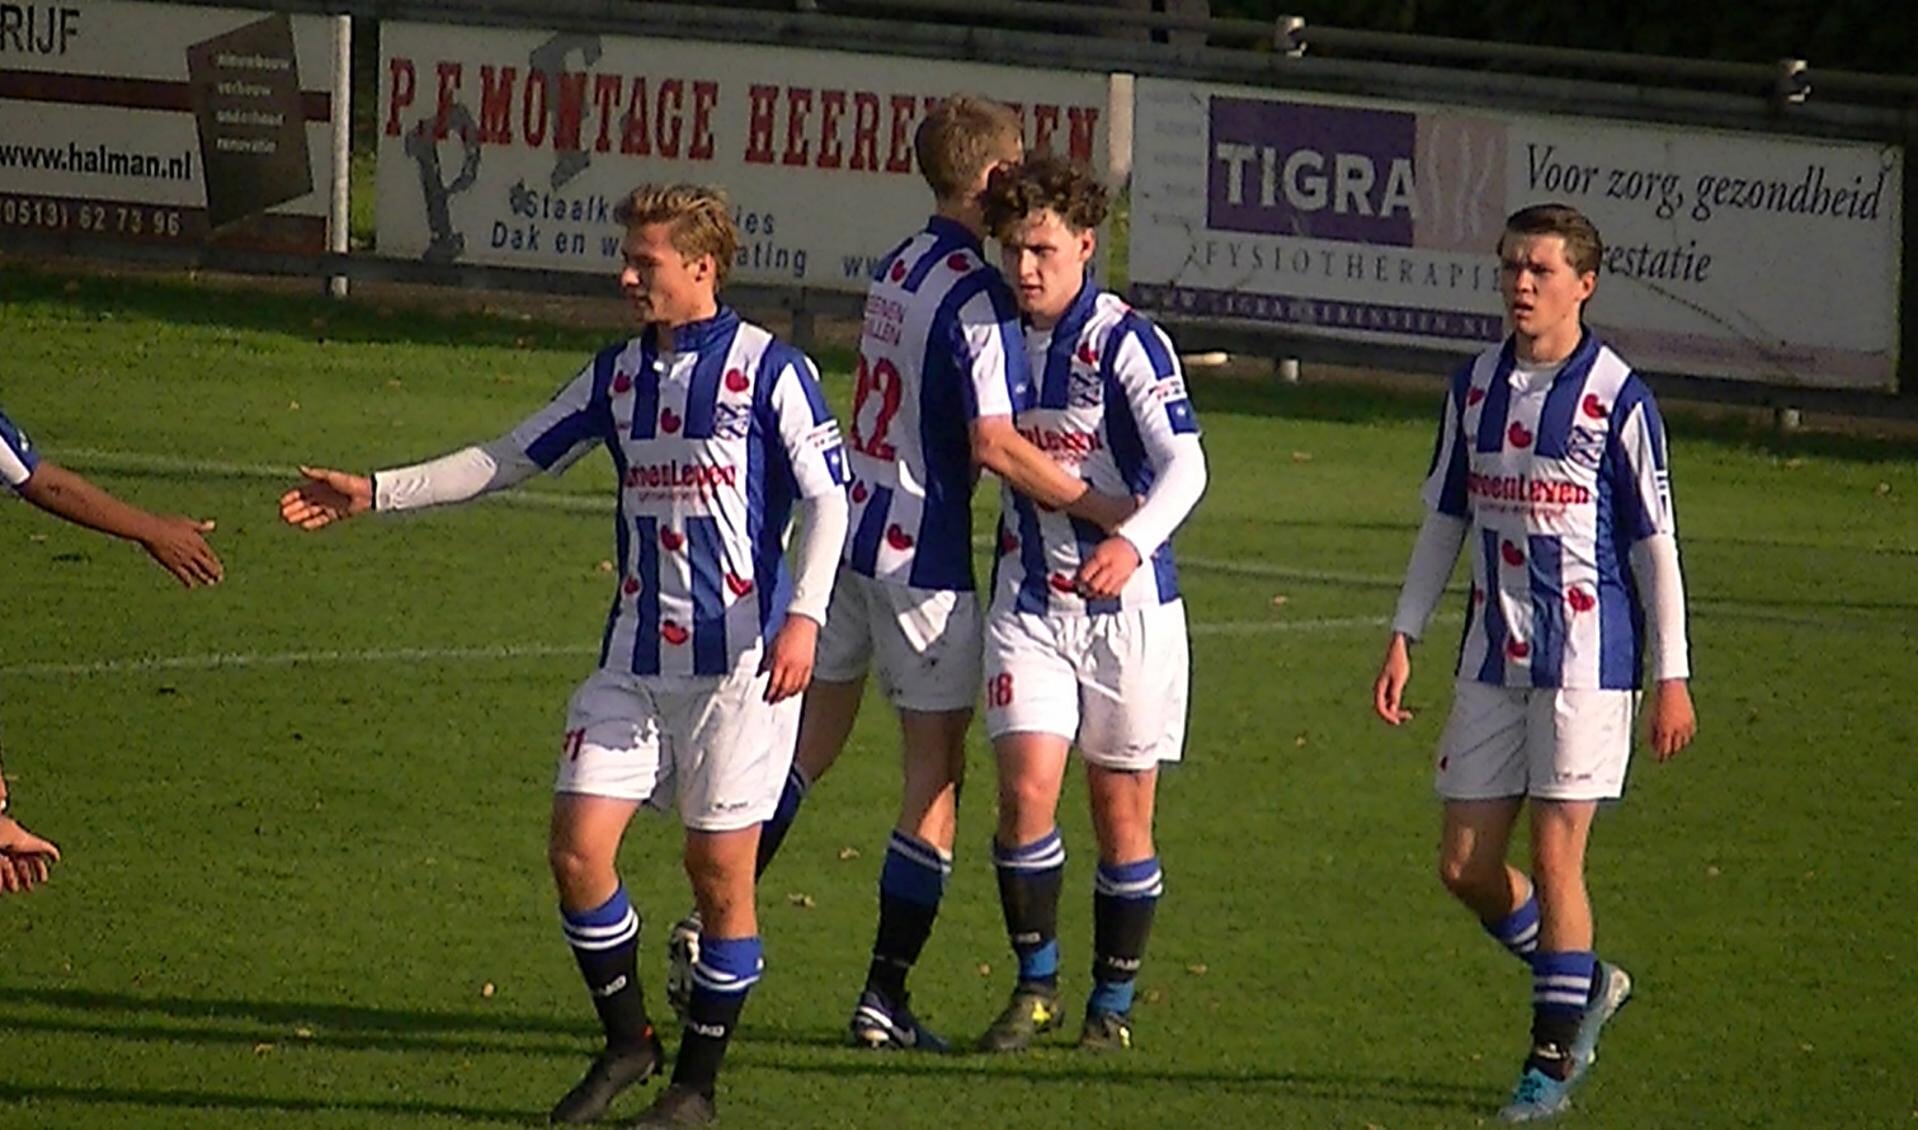 De 3 doelpuntenmakers (vlnr): Robin de Boer, Thymo de Vries en Tim Strandstra